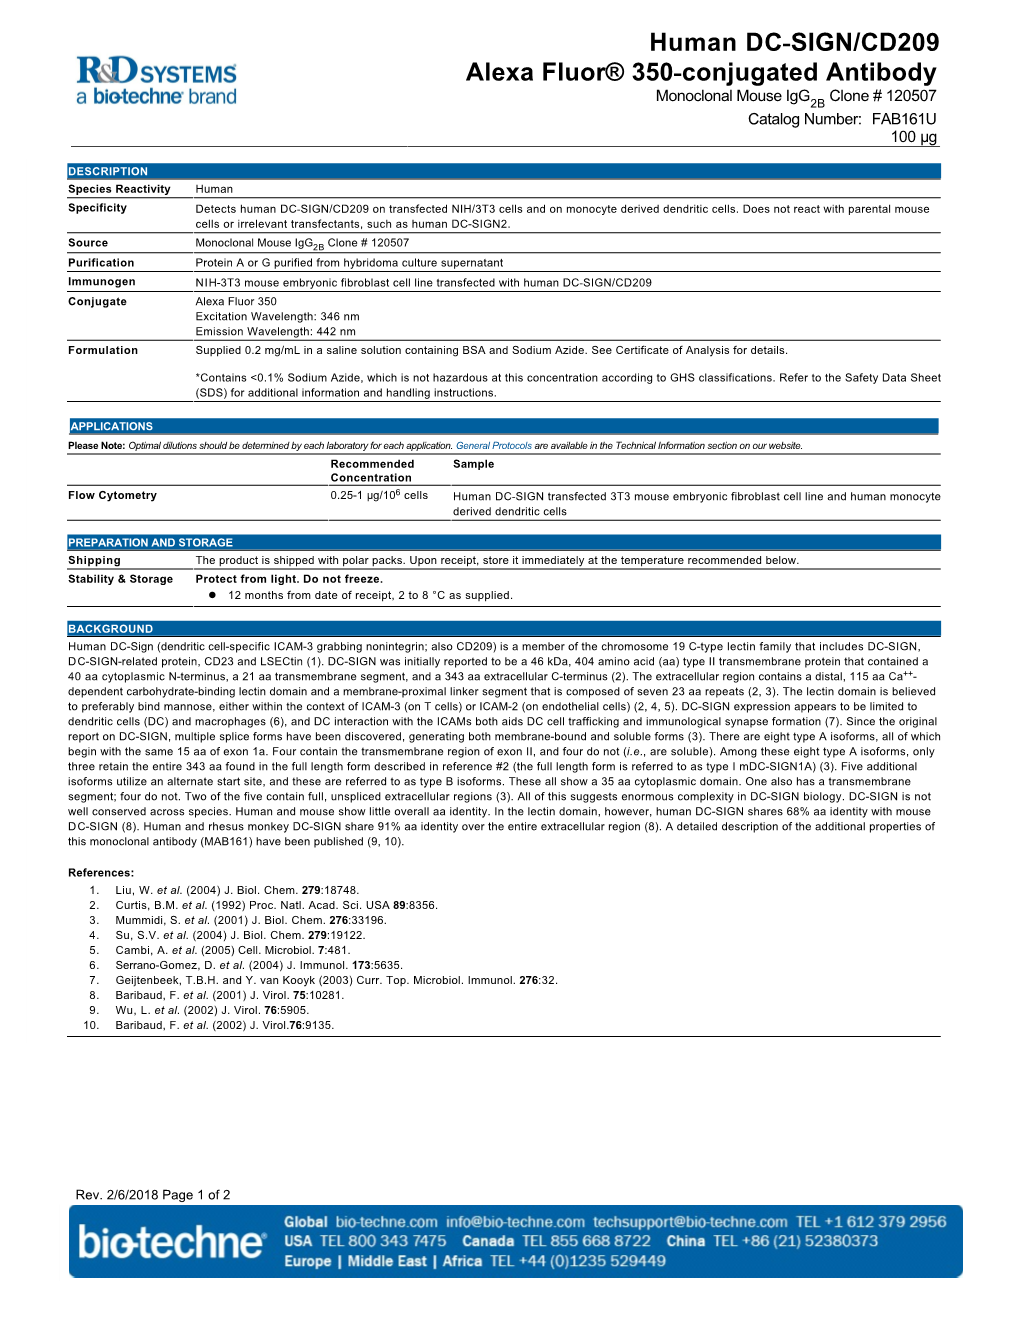 Human DC-SIGN/CD209 Alexa Fluor® 350-Conjugated Antibody